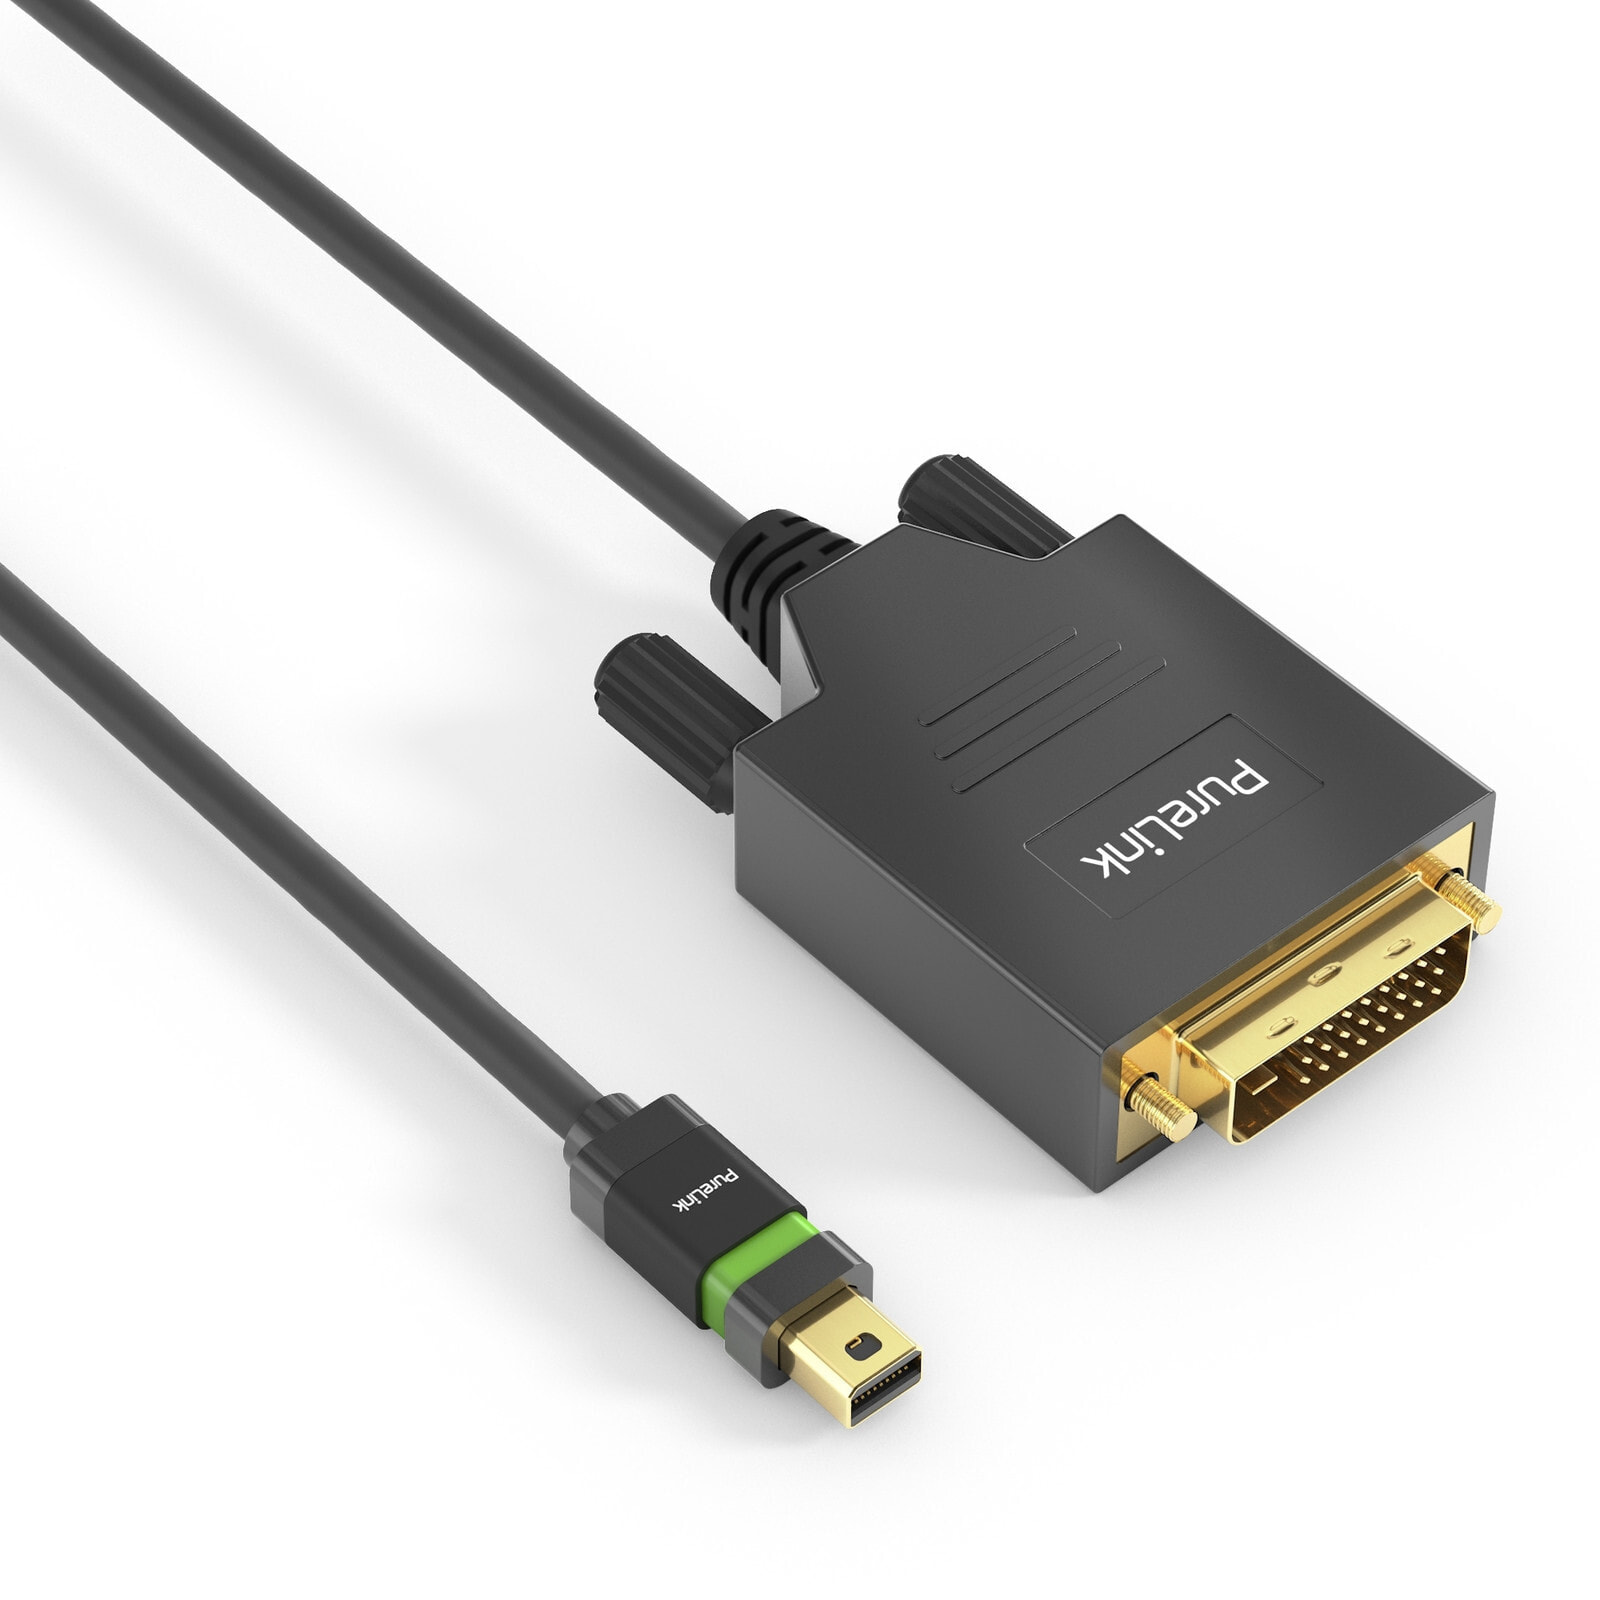 PureLink ULS2100-015 видео кабель адаптер 1,5 m Mini DisplayPort DVI Черный